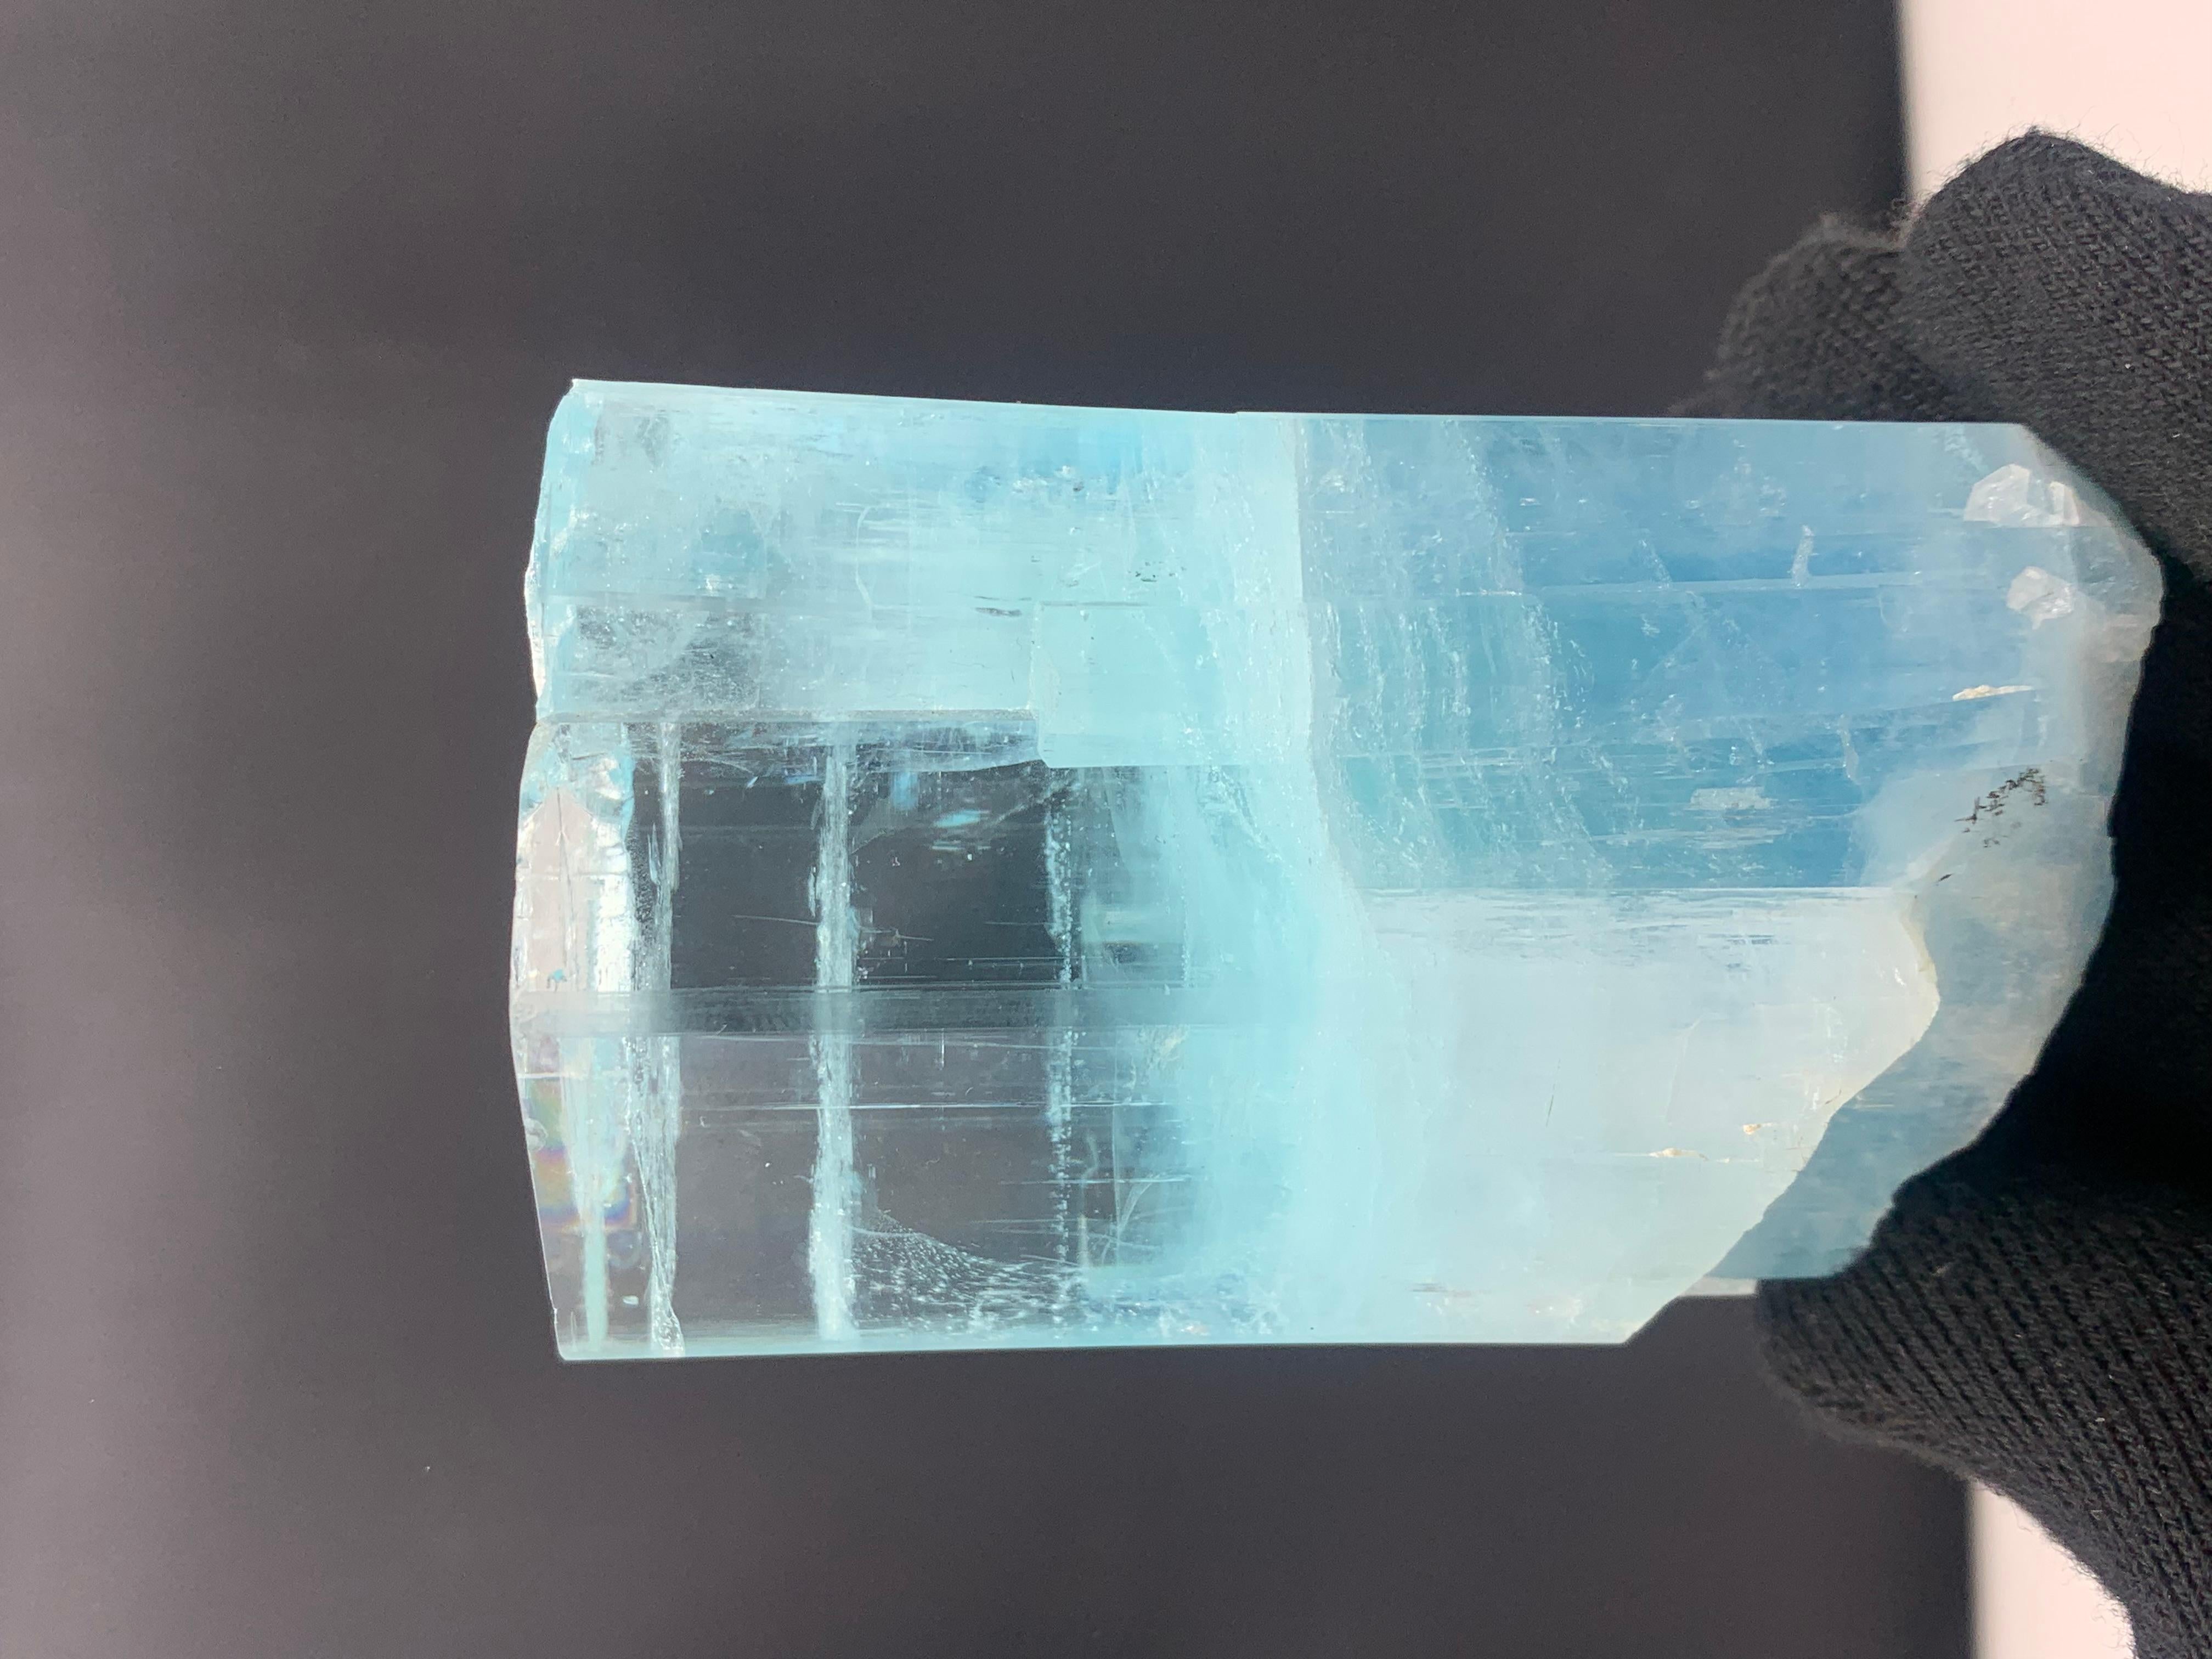 392.15 Gram Beautiful Aquamarine Crystal Bunch From Skardu District, Pakistan 

Weight: 392.15 Gram
Dimension: 8.5 x 5.5 x 4.2 Cm
Origin: Shigar Valley, Skardu District, Gilgit Baltistan Province, Pakistan 
Treatment: Double Terminated Damage